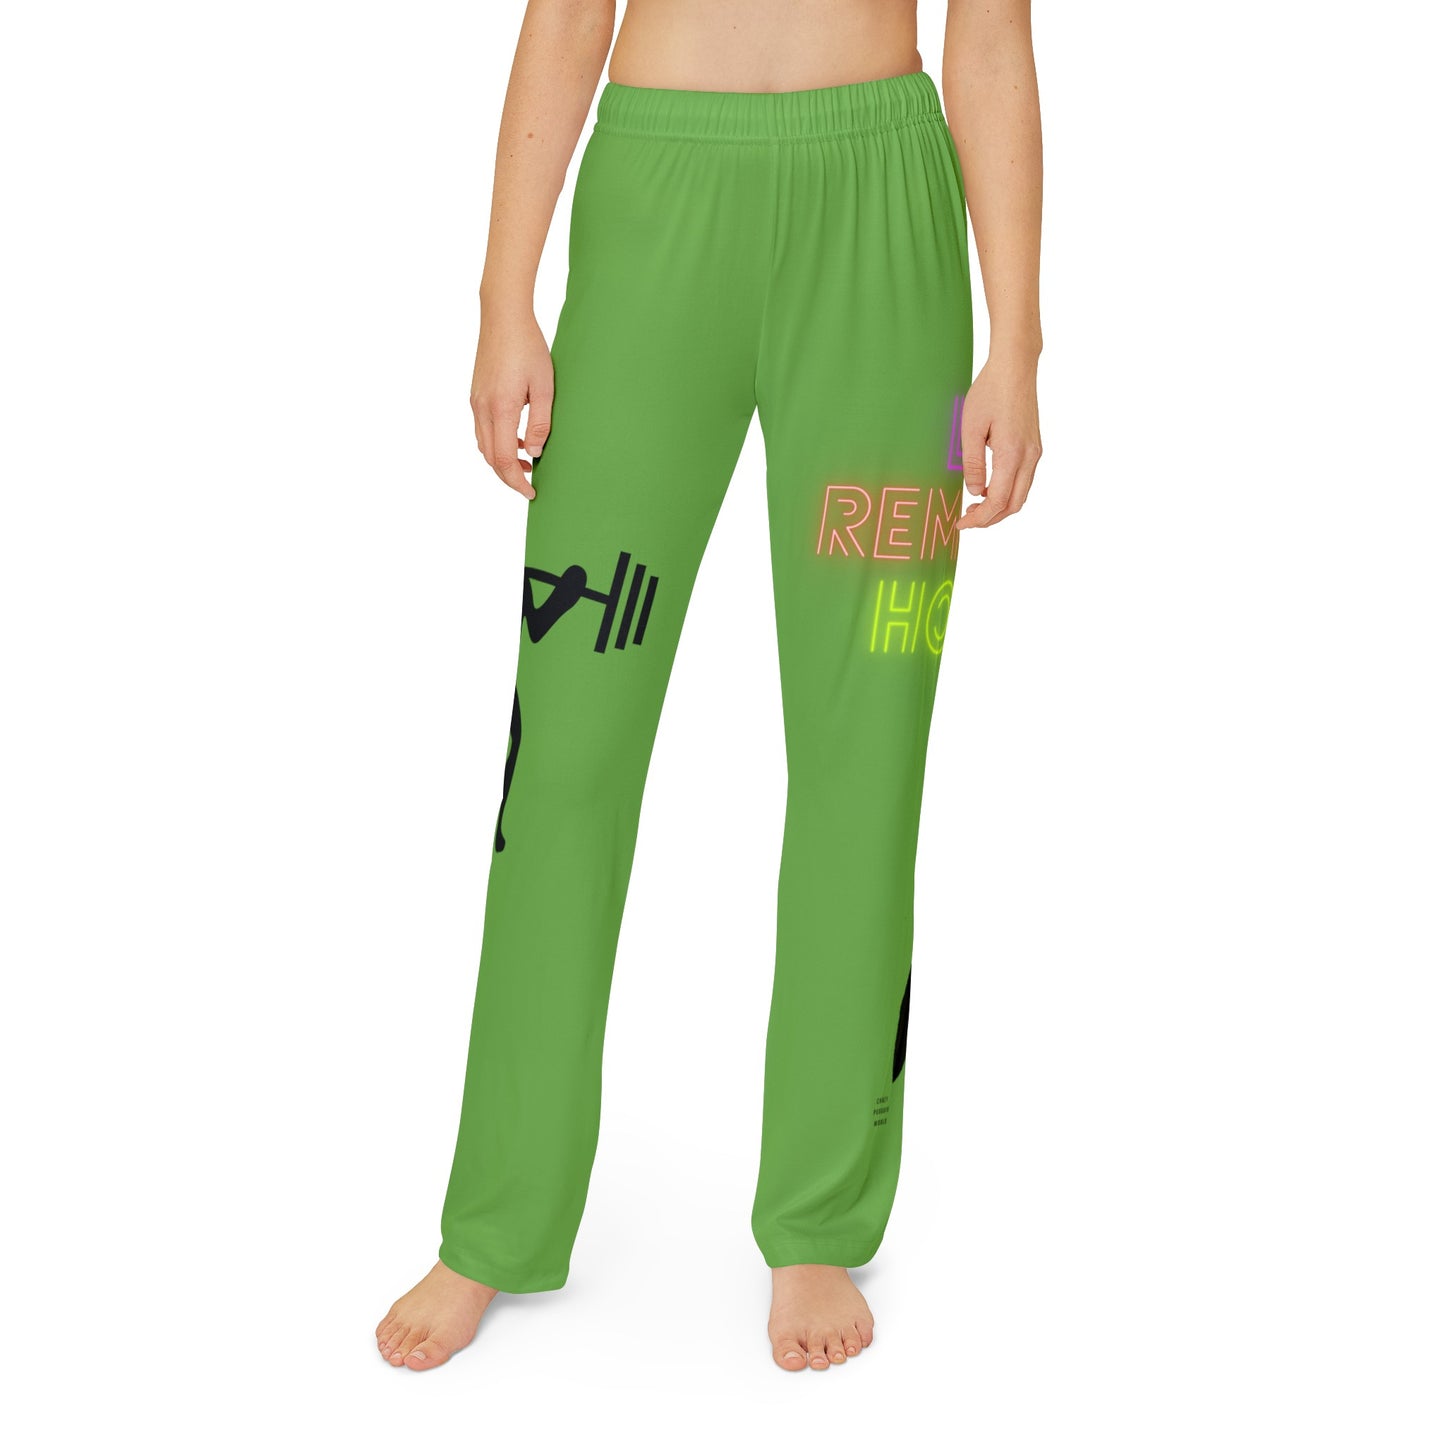 Kids Pajama Pants: Weightlifting Green